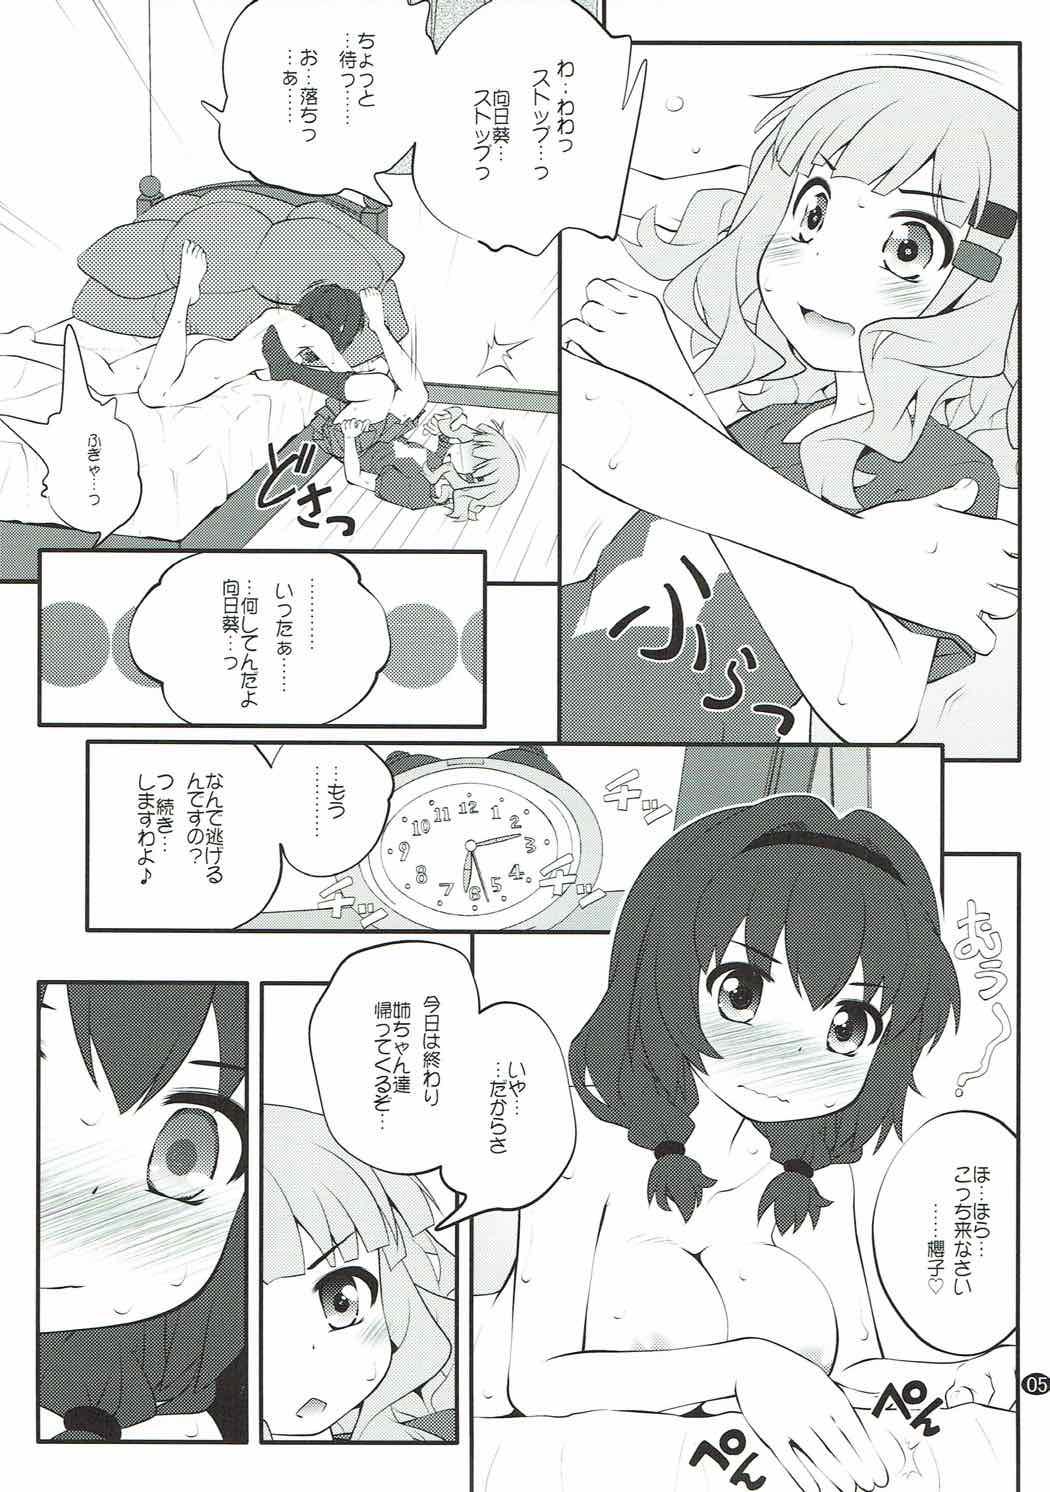 Rabo Himegoto Flowers 11 - Yuruyuri 4some - Page 4